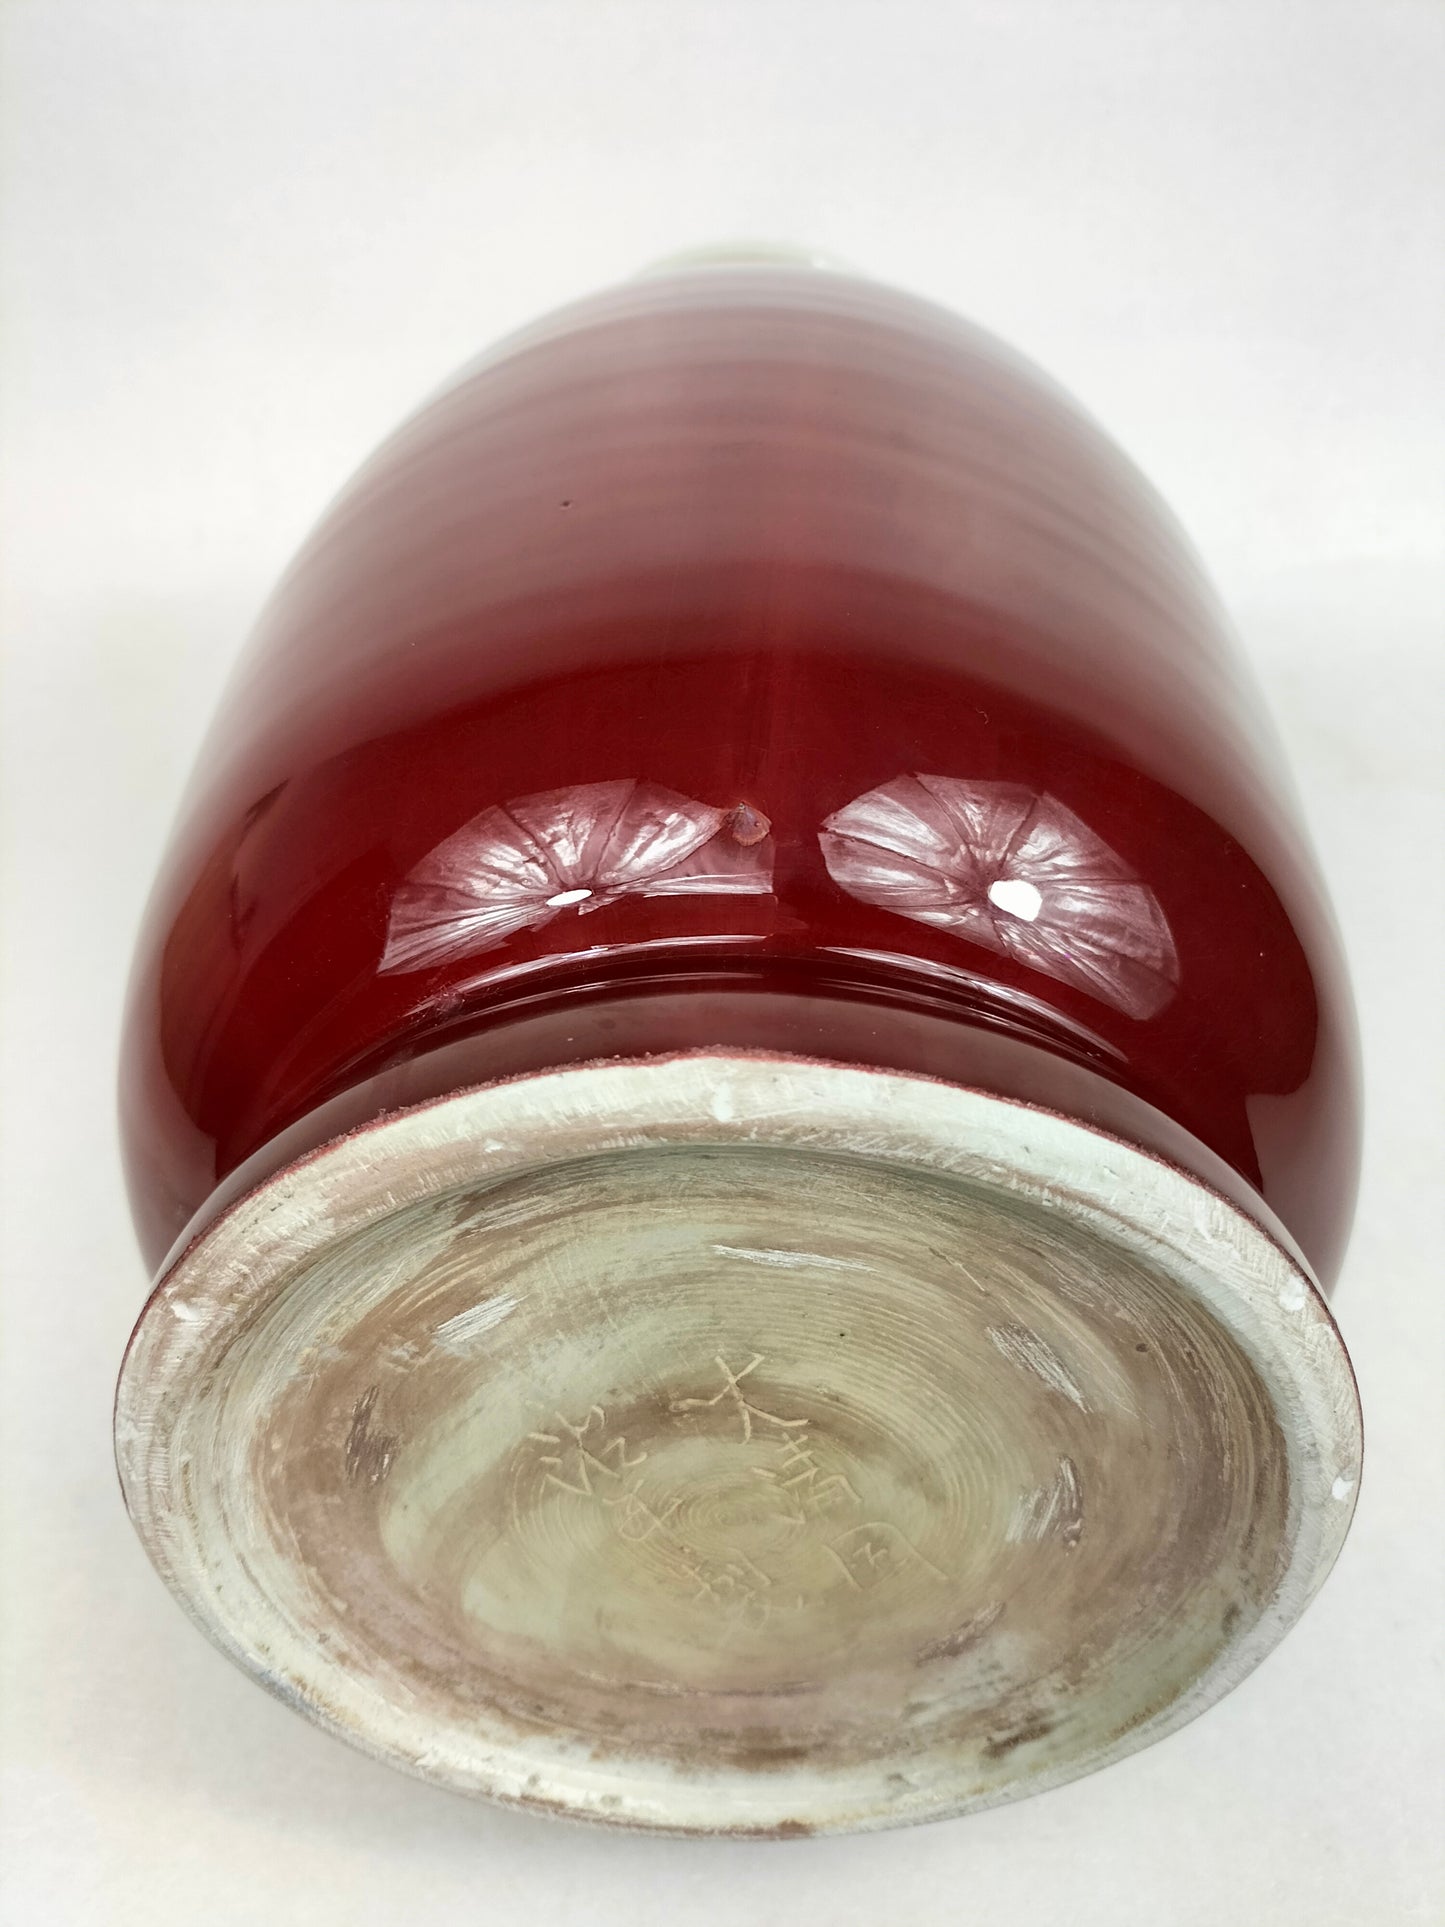 Grand vase sang de boeuf chinois // XXe siècle